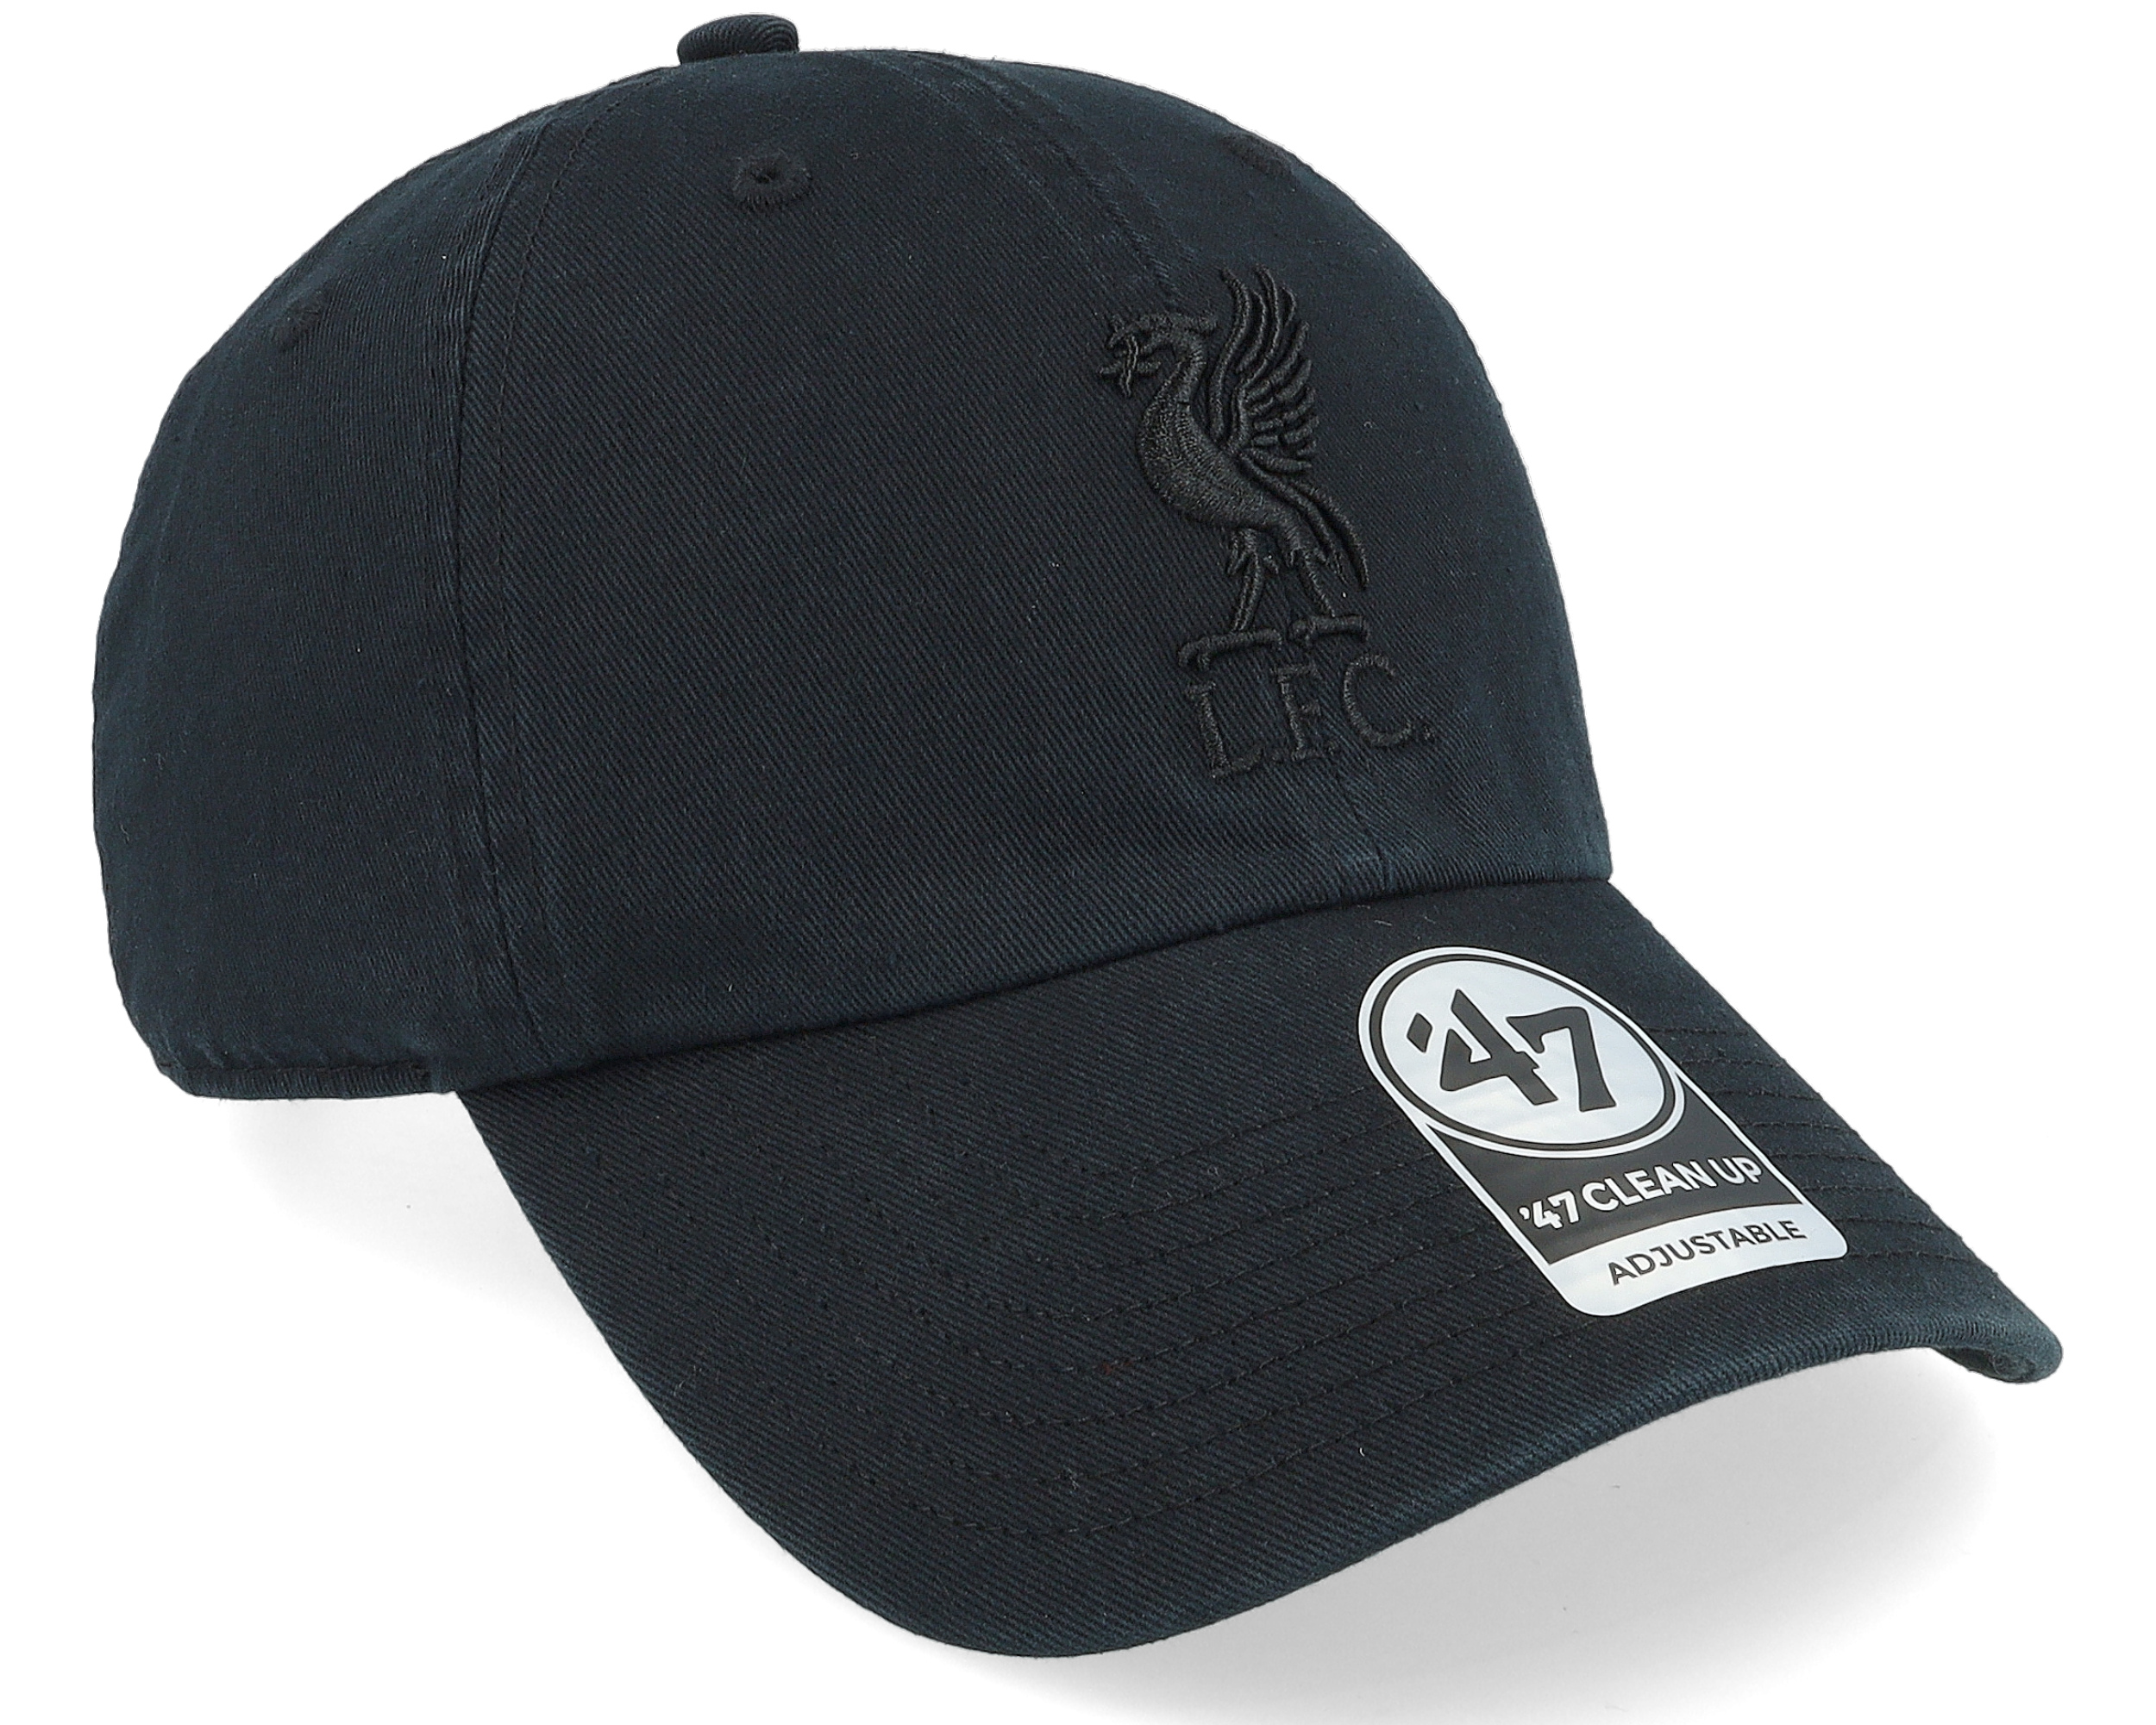 Hatstore Exclusive Liverpool FC Black/Black Dad Cap - 47 Brand caps ...